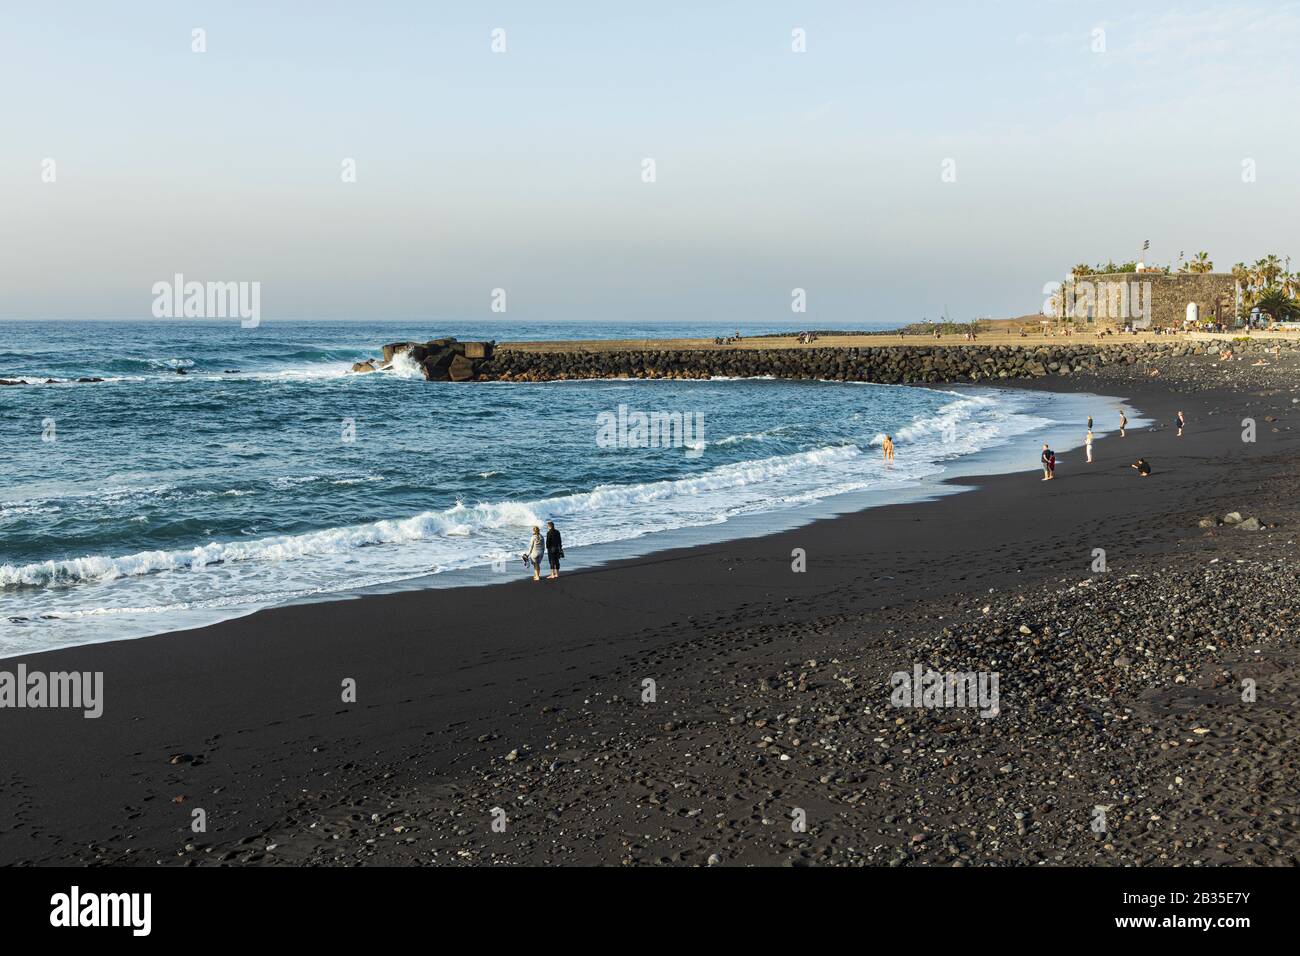 People on the beach at Playa Jardin, Puerto de la Cruz, Tenerife, Canary Islands, Spain, Stock Photo